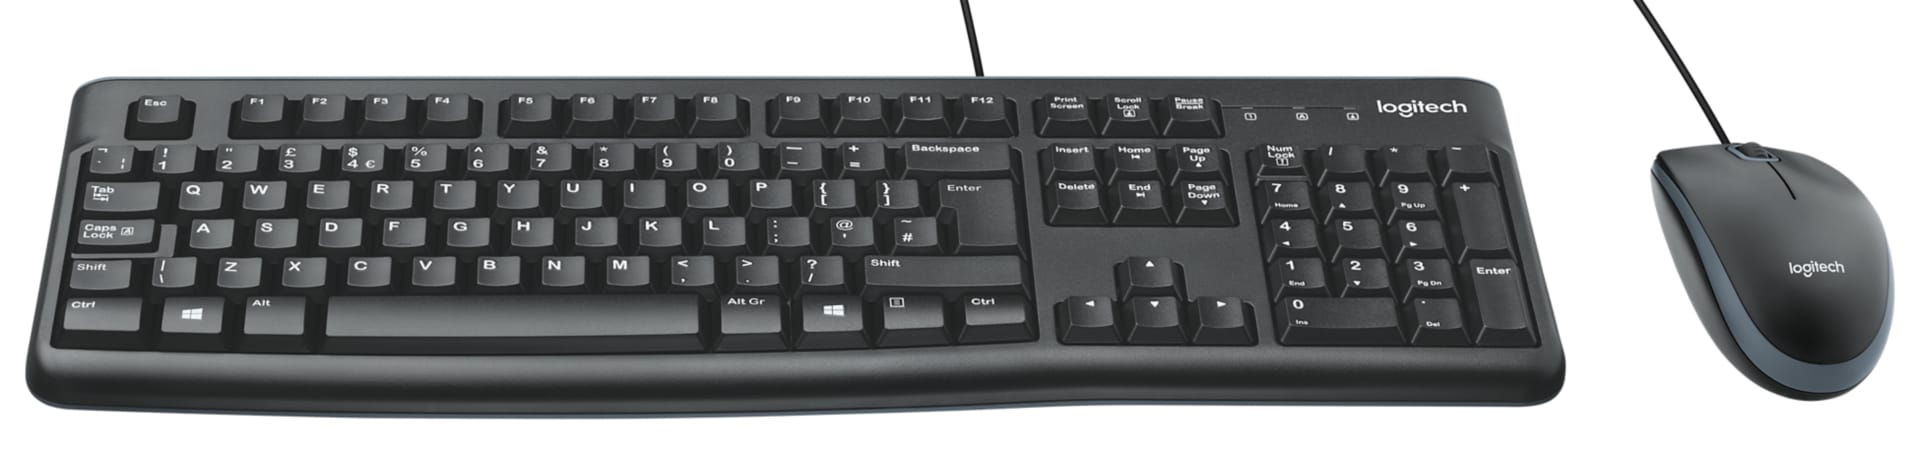 Logitech Desktop MK120 - keyboard and mouse set - English - 920-002565 -  Keyboard & Mouse Bundles 